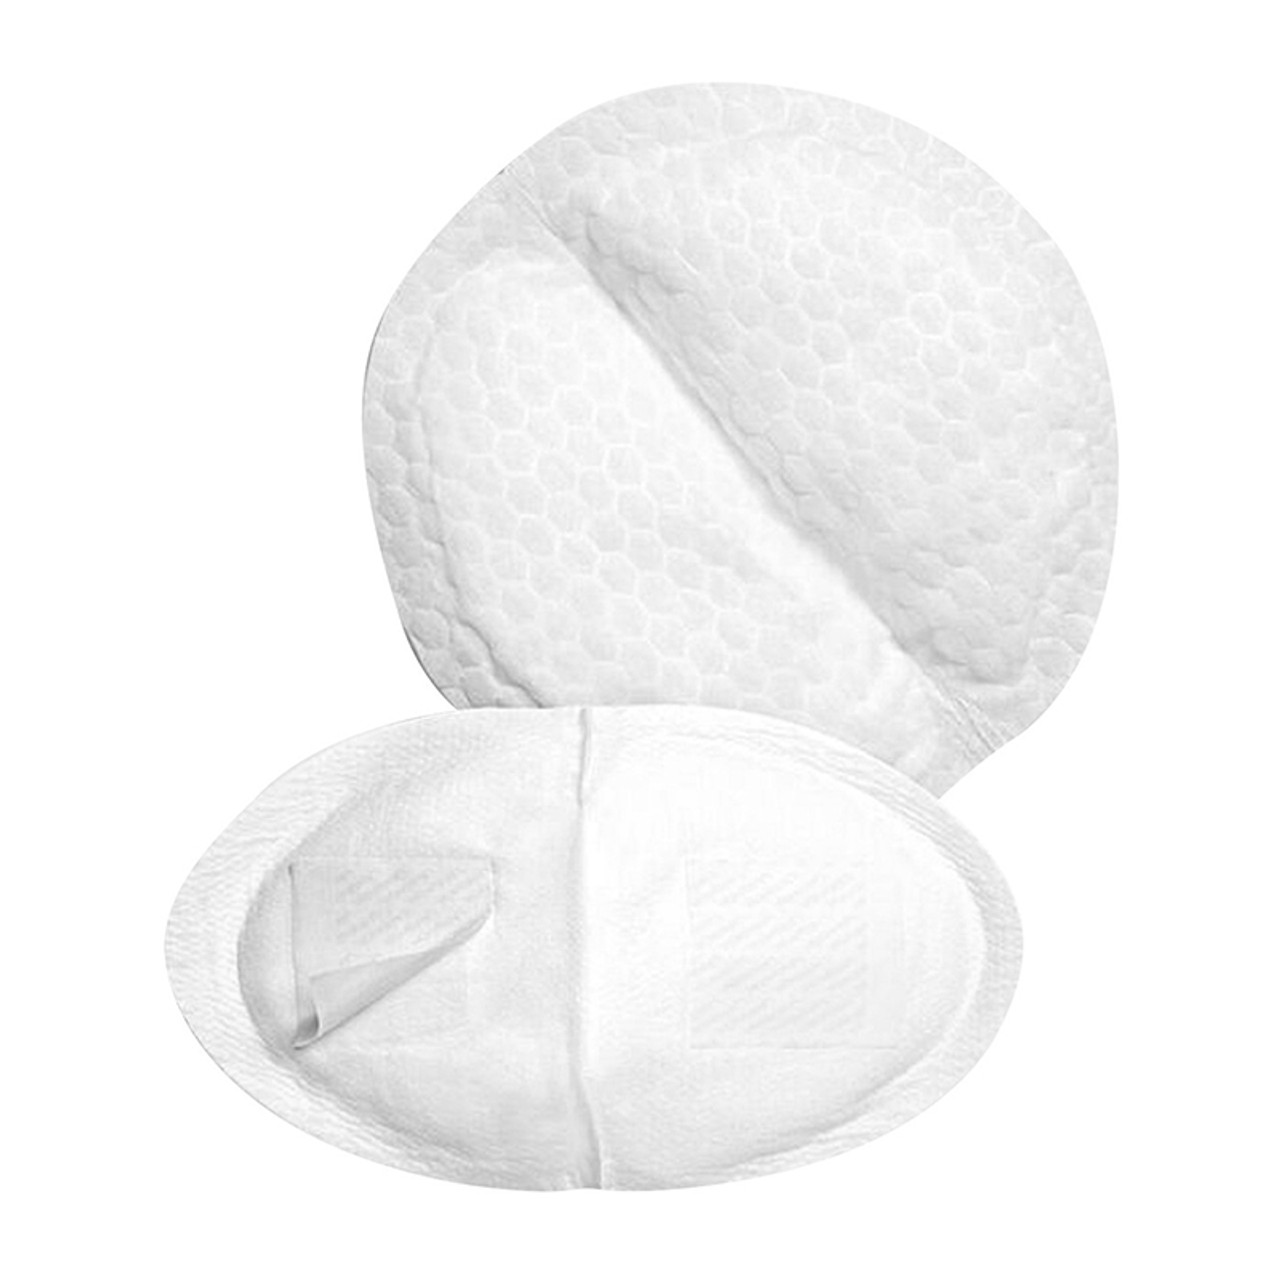 Lansinoh Stay Dry Disposable Breast Pad Nursing Pads Honeycomb 24's Per Box